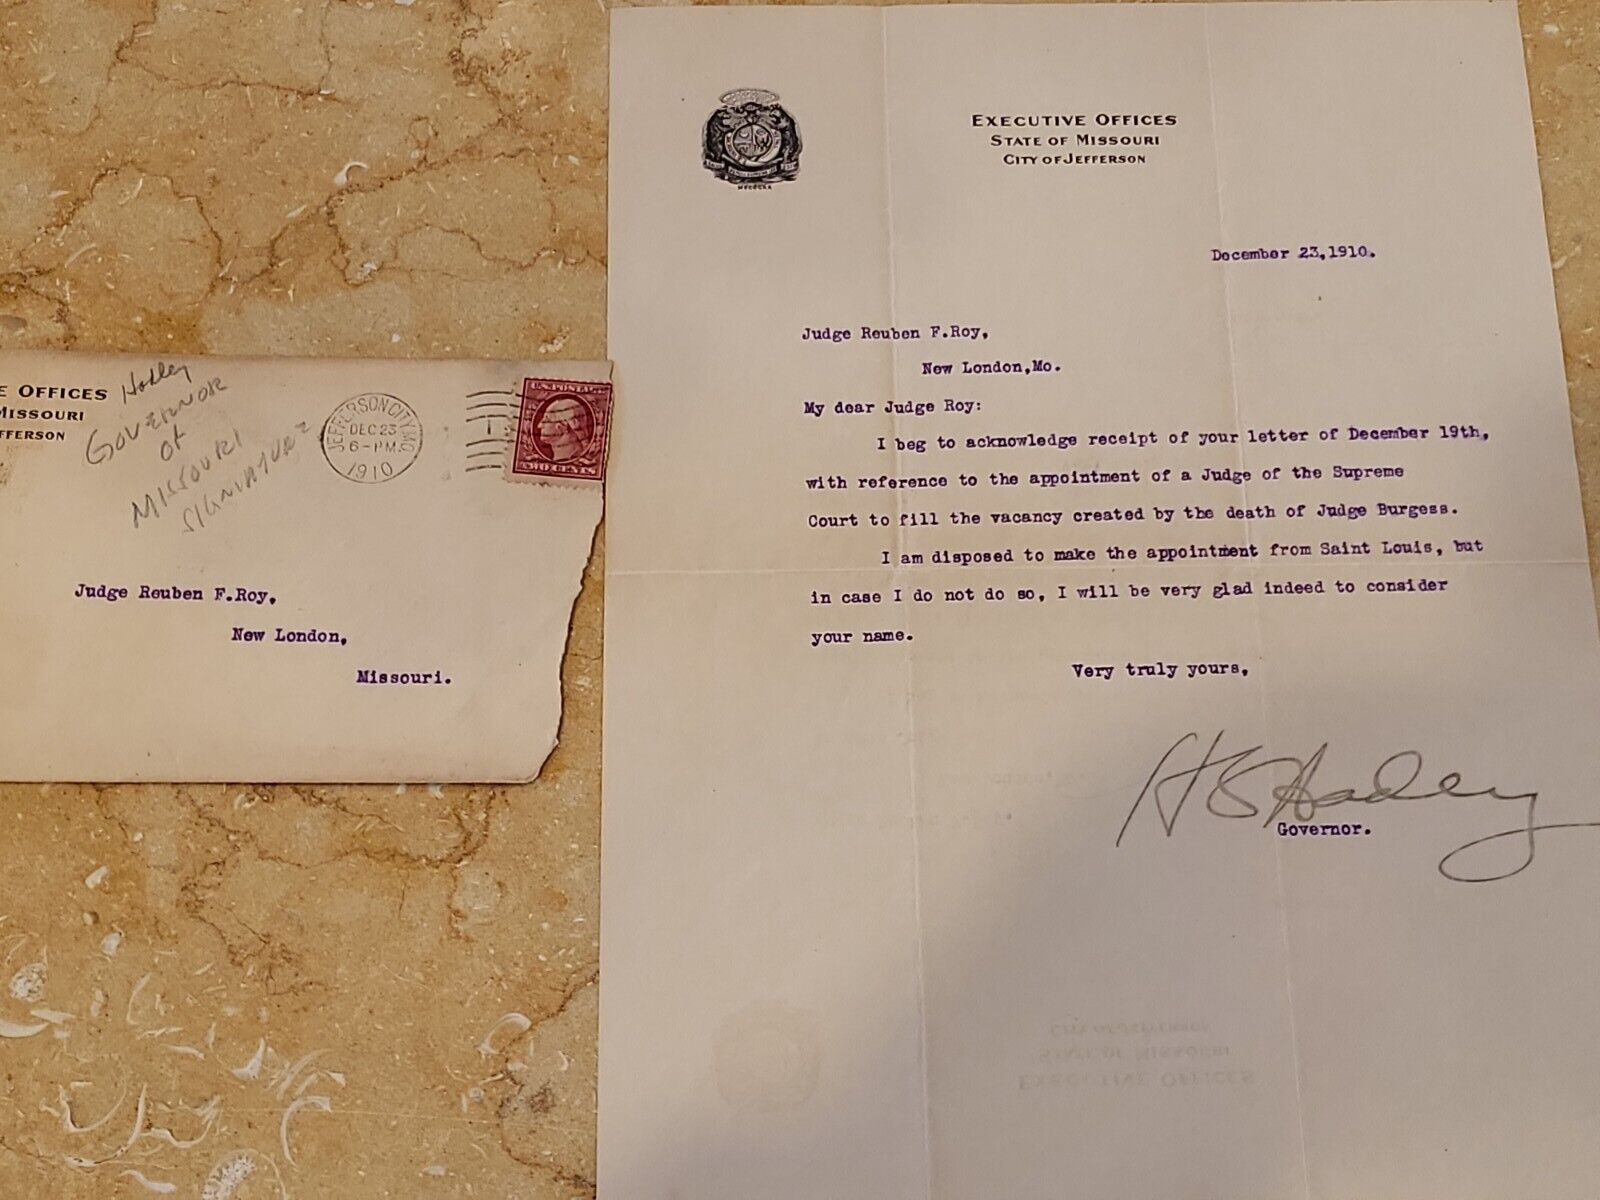 Missouri Governor Herbert Spencer Hadley signed letter 1910. Judge apt